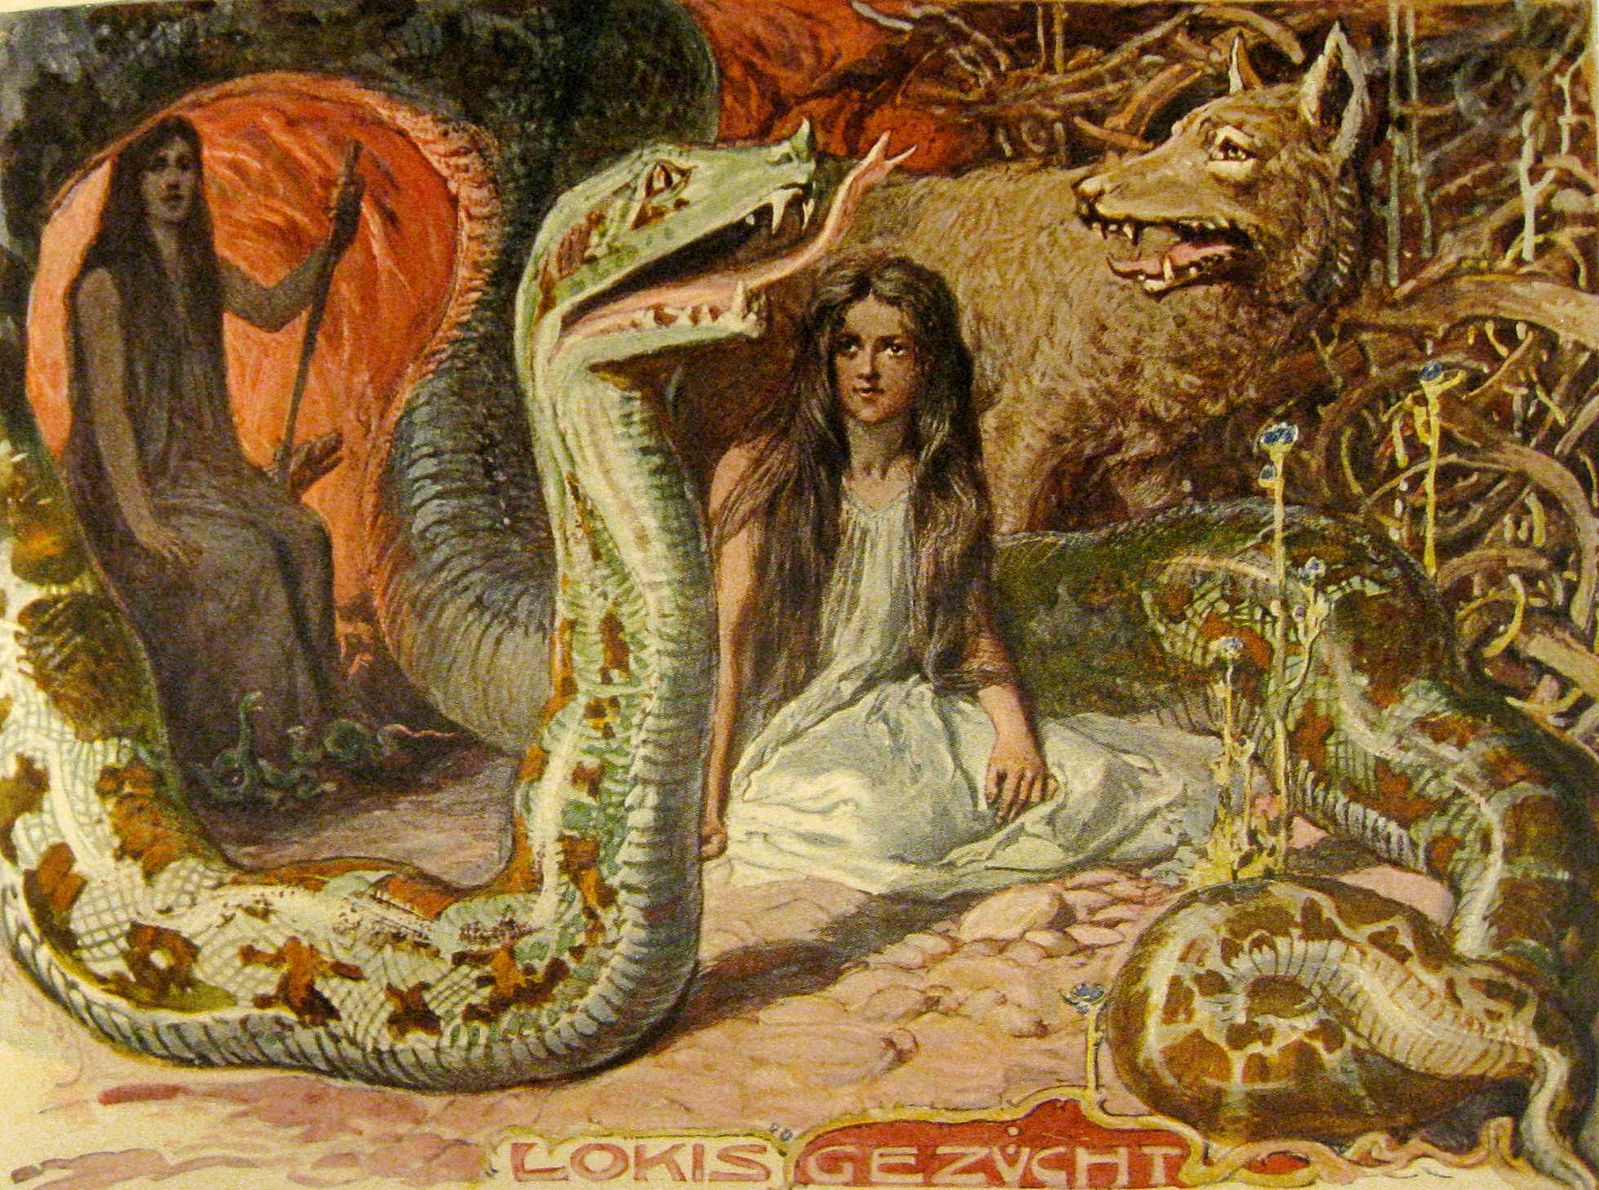 The Serpent (Record of Ragnarok), Villains Wiki